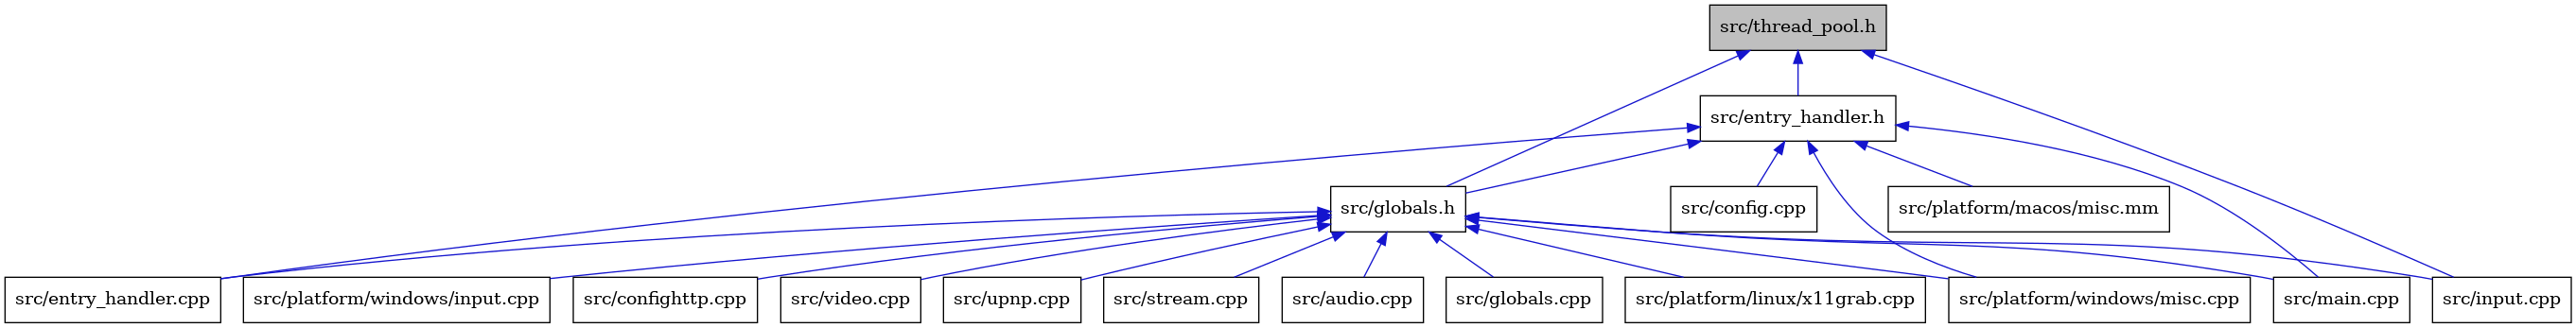 digraph {
    graph [bgcolor="#00000000"]
    node [shape=rectangle style=filled fillcolor="#FFFFFF" font=Helvetica padding=2]
    edge [color="#1414CE"]
    "5" [label="src/globals.h" tooltip="src/globals.h"]
    "2" [label="src/entry_handler.h" tooltip="src/entry_handler.h"]
    "12" [label="src/platform/windows/input.cpp" tooltip="src/platform/windows/input.cpp"]
    "4" [label="src/entry_handler.cpp" tooltip="src/entry_handler.cpp"]
    "3" [label="src/config.cpp" tooltip="src/config.cpp"]
    "9" [label="src/input.cpp" tooltip="src/input.cpp"]
    "7" [label="src/confighttp.cpp" tooltip="src/confighttp.cpp"]
    "16" [label="src/video.cpp" tooltip="src/video.cpp"]
    "15" [label="src/upnp.cpp" tooltip="src/upnp.cpp"]
    "1" [label="src/thread_pool.h" tooltip="src/thread_pool.h" fillcolor="#BFBFBF"]
    "14" [label="src/stream.cpp" tooltip="src/stream.cpp"]
    "6" [label="src/audio.cpp" tooltip="src/audio.cpp"]
    "8" [label="src/globals.cpp" tooltip="src/globals.cpp"]
    "13" [label="src/platform/windows/misc.cpp" tooltip="src/platform/windows/misc.cpp"]
    "17" [label="src/platform/macos/misc.mm" tooltip="src/platform/macos/misc.mm"]
    "11" [label="src/platform/linux/x11grab.cpp" tooltip="src/platform/linux/x11grab.cpp"]
    "10" [label="src/main.cpp" tooltip="src/main.cpp"]
    "5" -> "6" [dir=back tooltip="include"]
    "5" -> "7" [dir=back tooltip="include"]
    "5" -> "4" [dir=back tooltip="include"]
    "5" -> "8" [dir=back tooltip="include"]
    "5" -> "9" [dir=back tooltip="include"]
    "5" -> "10" [dir=back tooltip="include"]
    "5" -> "11" [dir=back tooltip="include"]
    "5" -> "12" [dir=back tooltip="include"]
    "5" -> "13" [dir=back tooltip="include"]
    "5" -> "14" [dir=back tooltip="include"]
    "5" -> "15" [dir=back tooltip="include"]
    "5" -> "16" [dir=back tooltip="include"]
    "2" -> "3" [dir=back tooltip="include"]
    "2" -> "4" [dir=back tooltip="include"]
    "2" -> "5" [dir=back tooltip="include"]
    "2" -> "10" [dir=back tooltip="include"]
    "2" -> "17" [dir=back tooltip="include"]
    "2" -> "13" [dir=back tooltip="include"]
    "1" -> "2" [dir=back tooltip="include"]
    "1" -> "5" [dir=back tooltip="include"]
    "1" -> "9" [dir=back tooltip="include"]
}